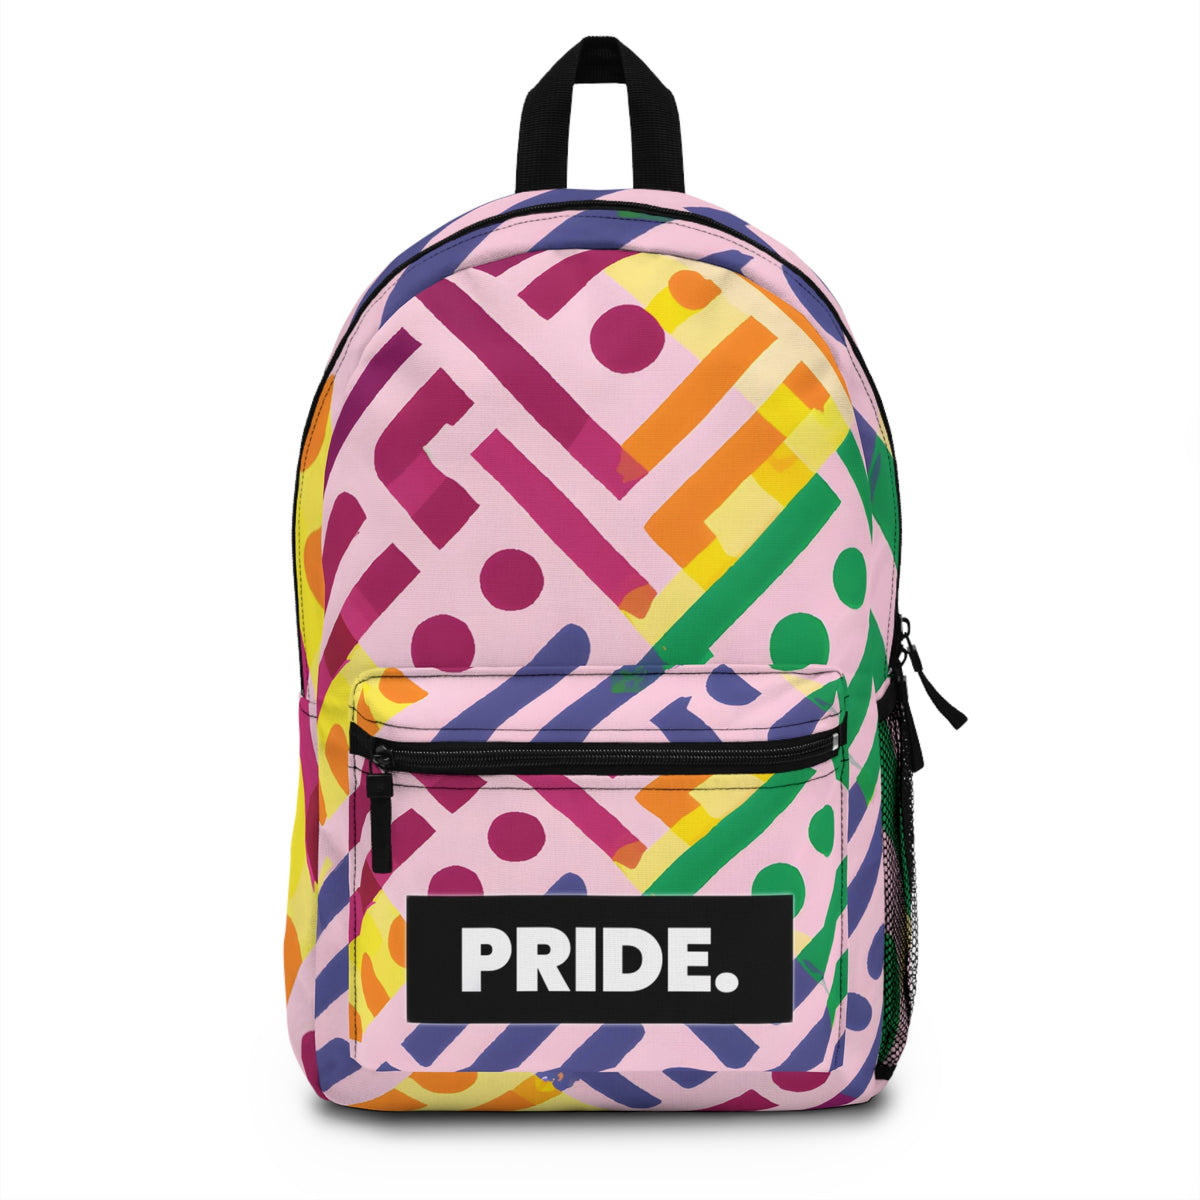 IrisFantasia - Gay Pride Backpack